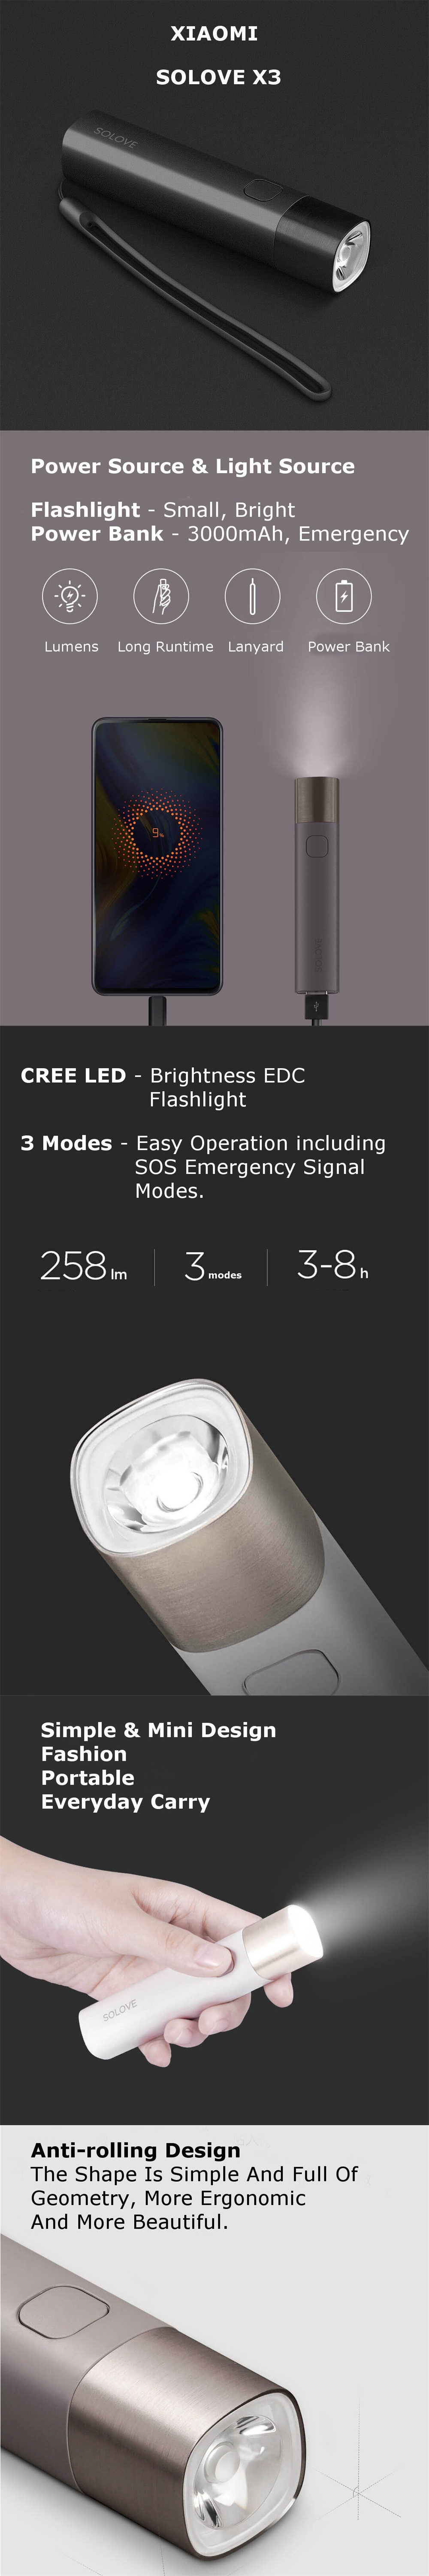 Xiaomi SOLOVE X3 USB Rechargeable Flashlight Power Bank 2